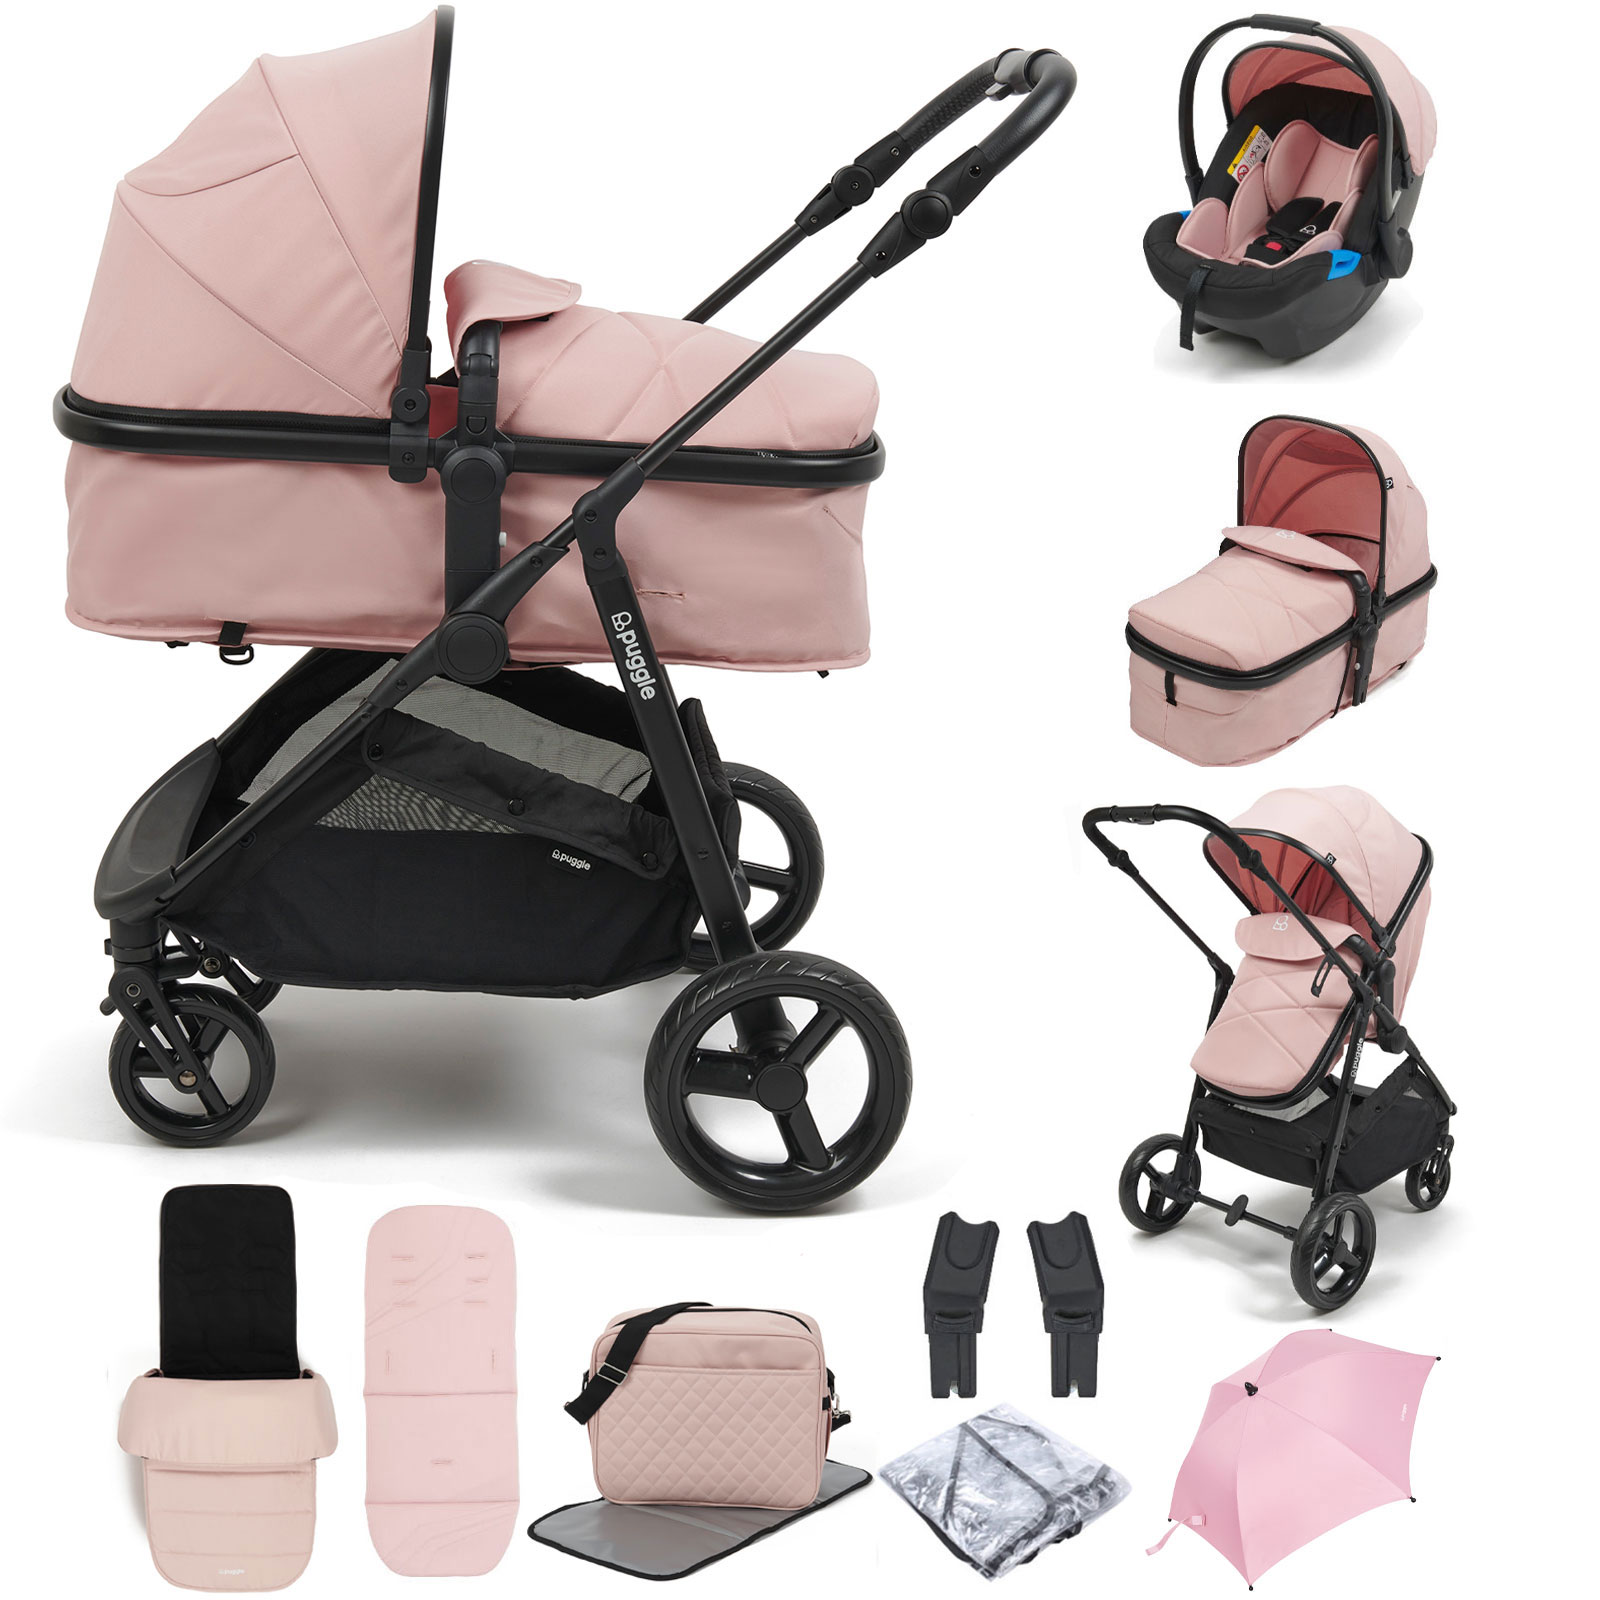 Puggle Monaco XT 2in1 Pushchair Travel System with Footmuff, Changing Bag & Parasol - Blush Pink